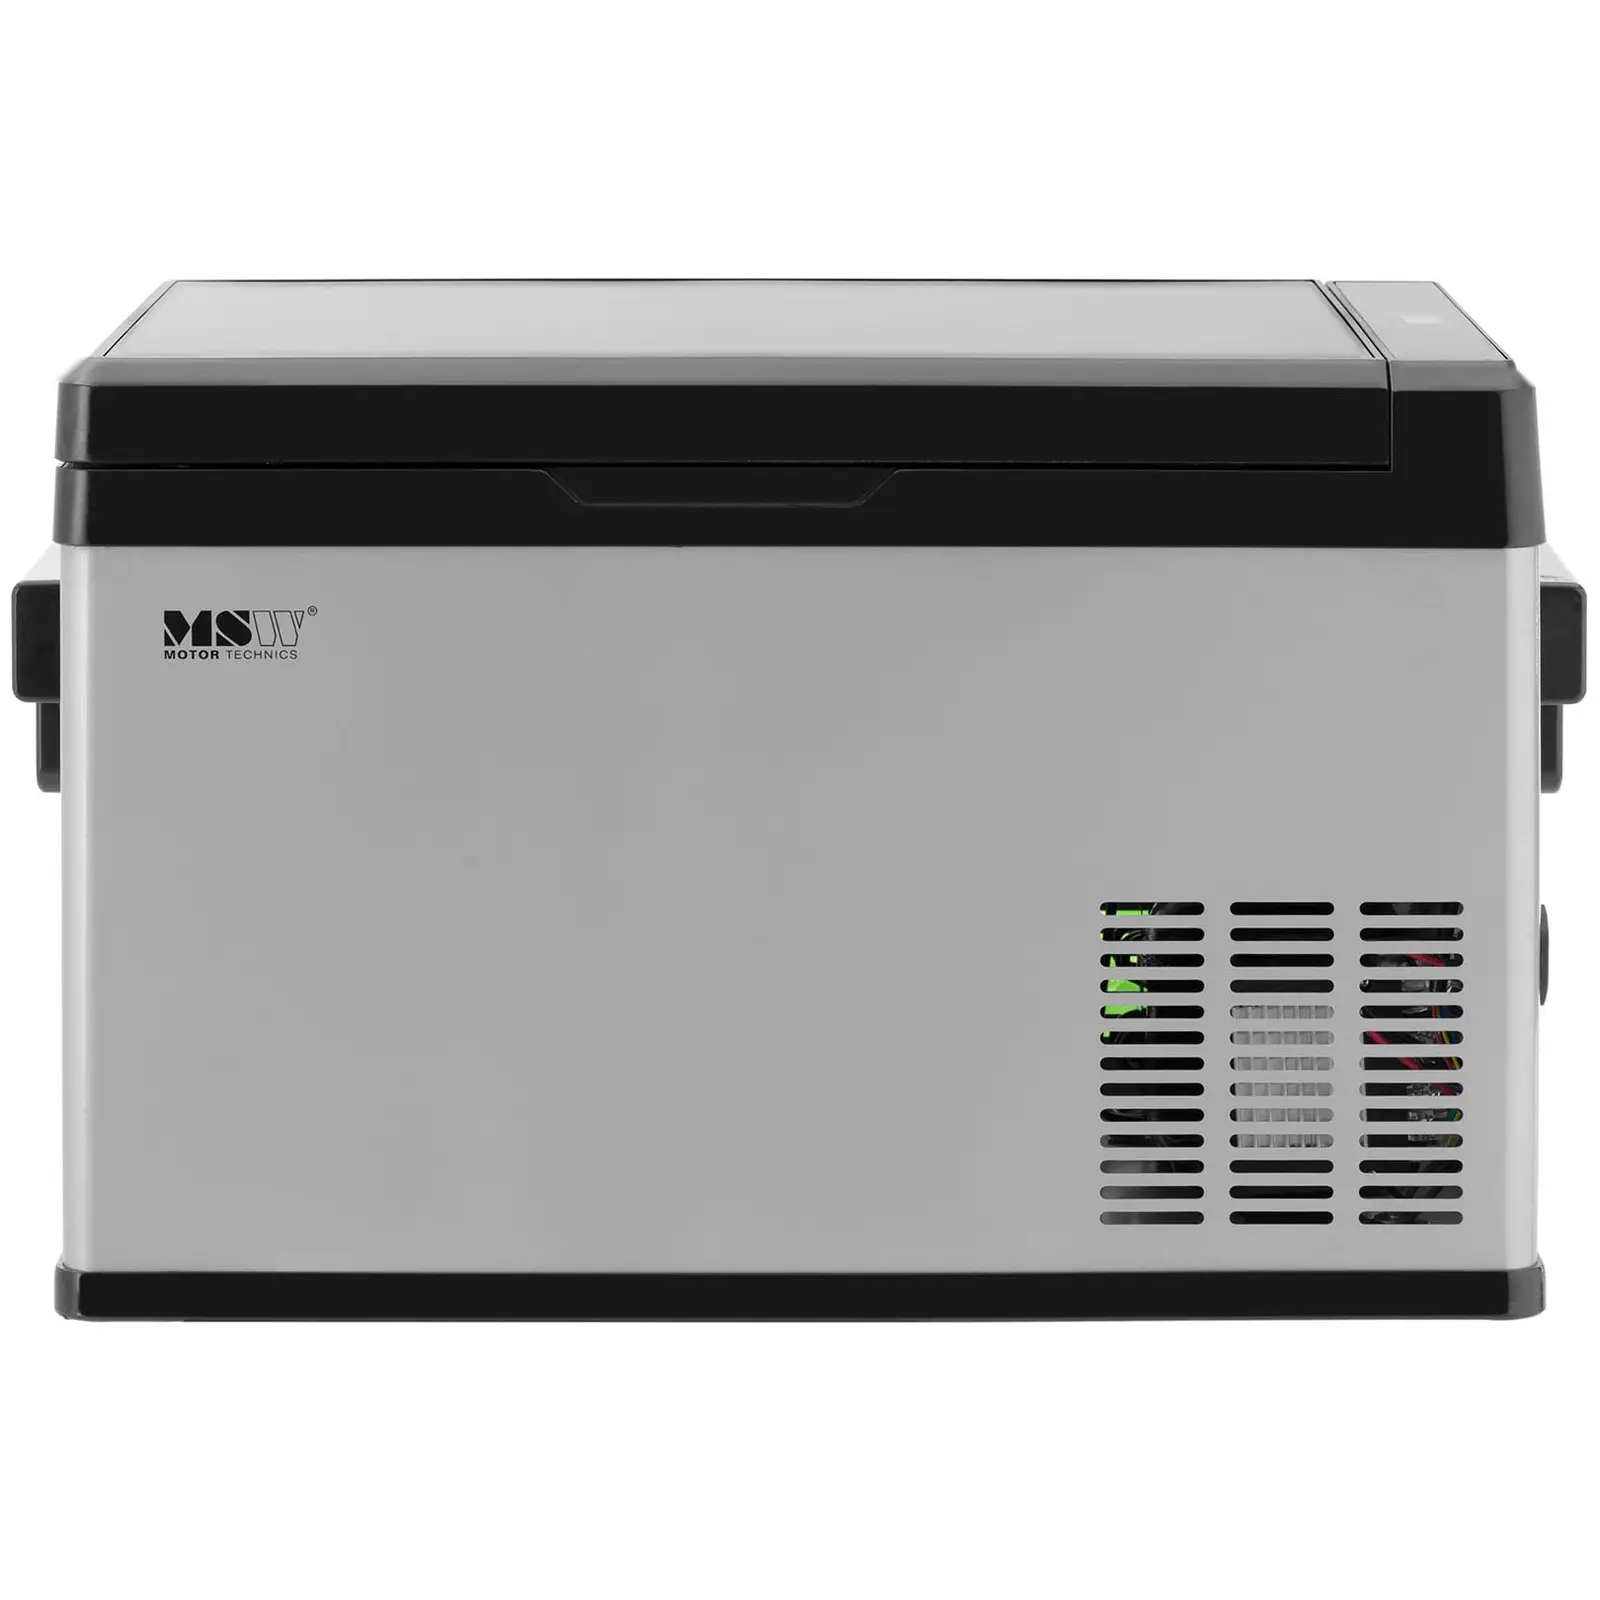 Frigo portatile / congelatore - 29 L - -20 - 20 °C - 12/24 V (DC) / Adattatore AC